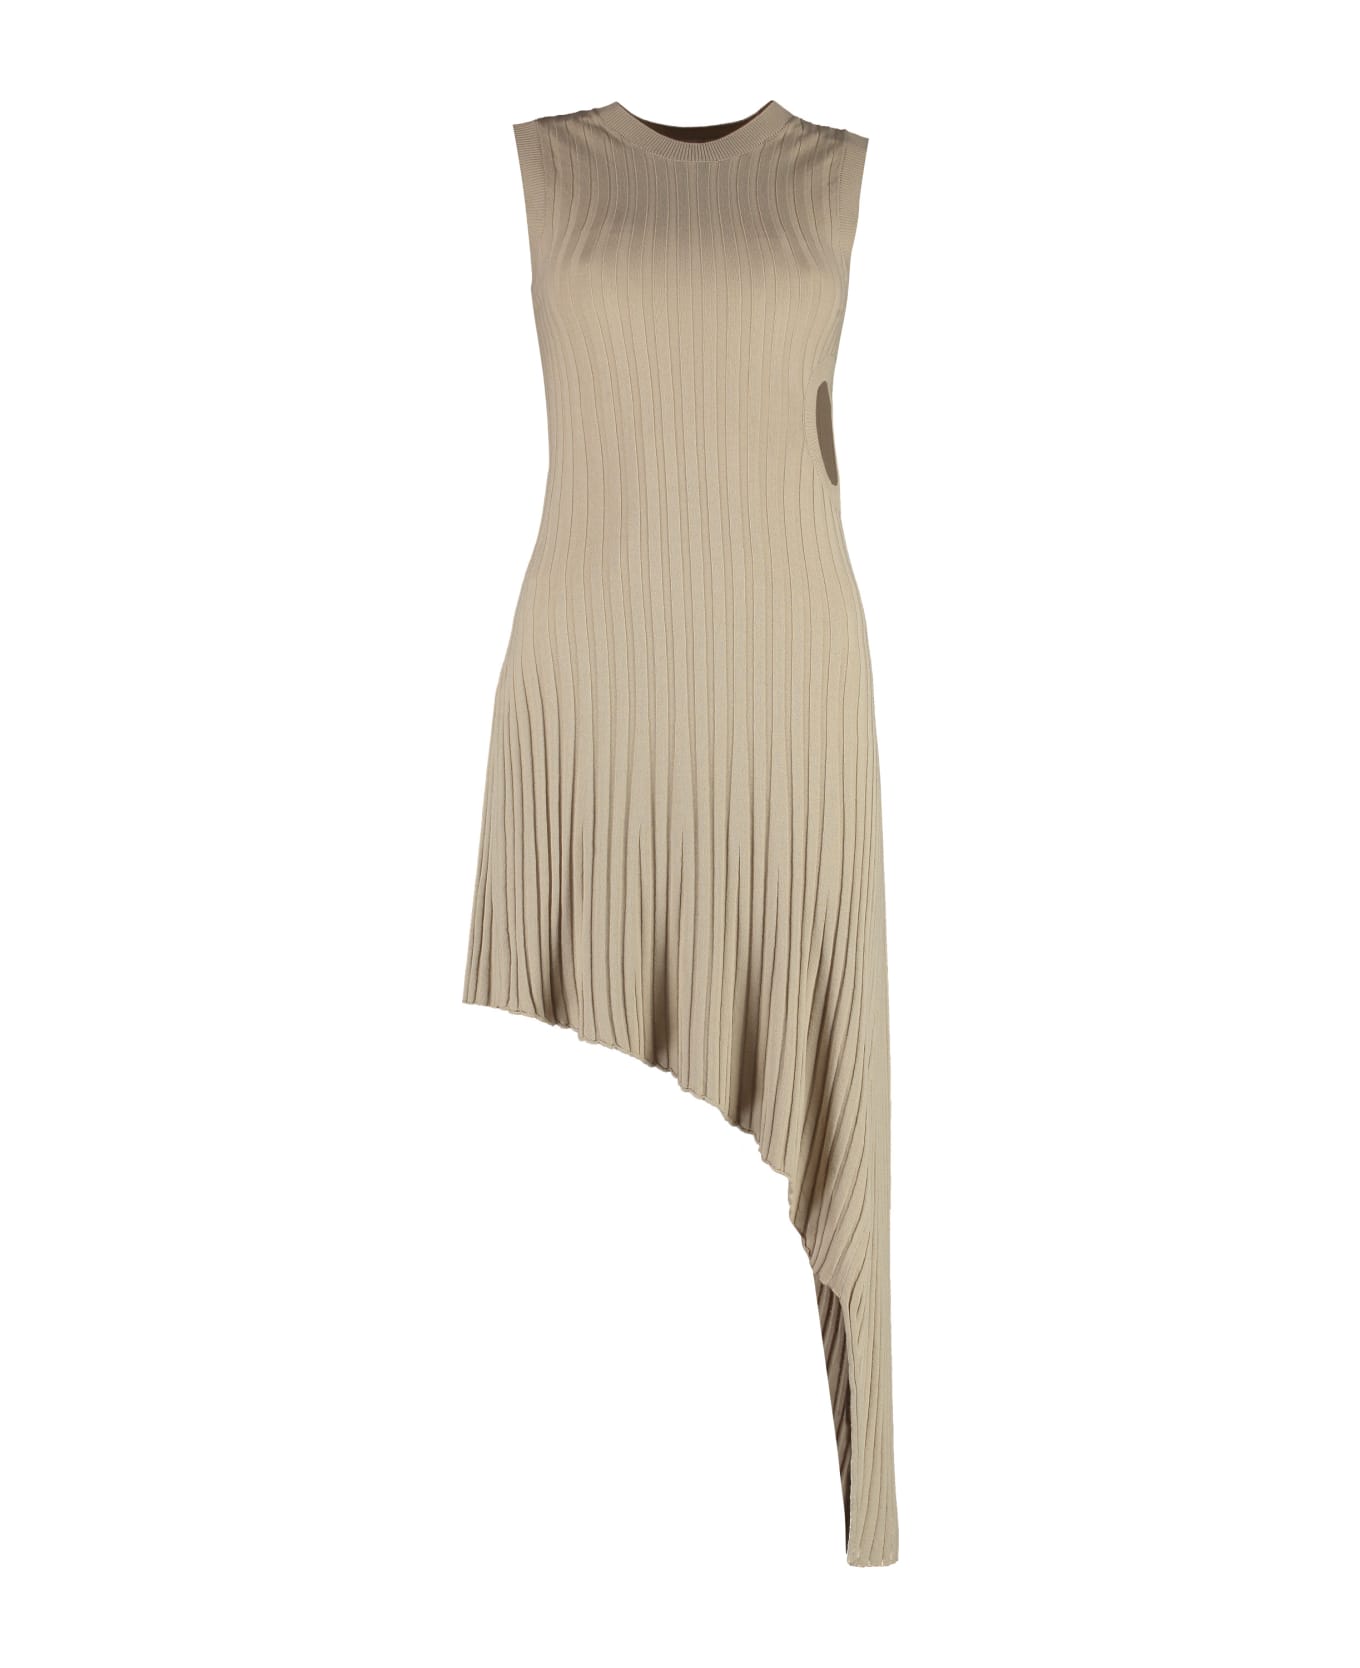 Stella McCartney Technical Rib Knit Dress - Sand